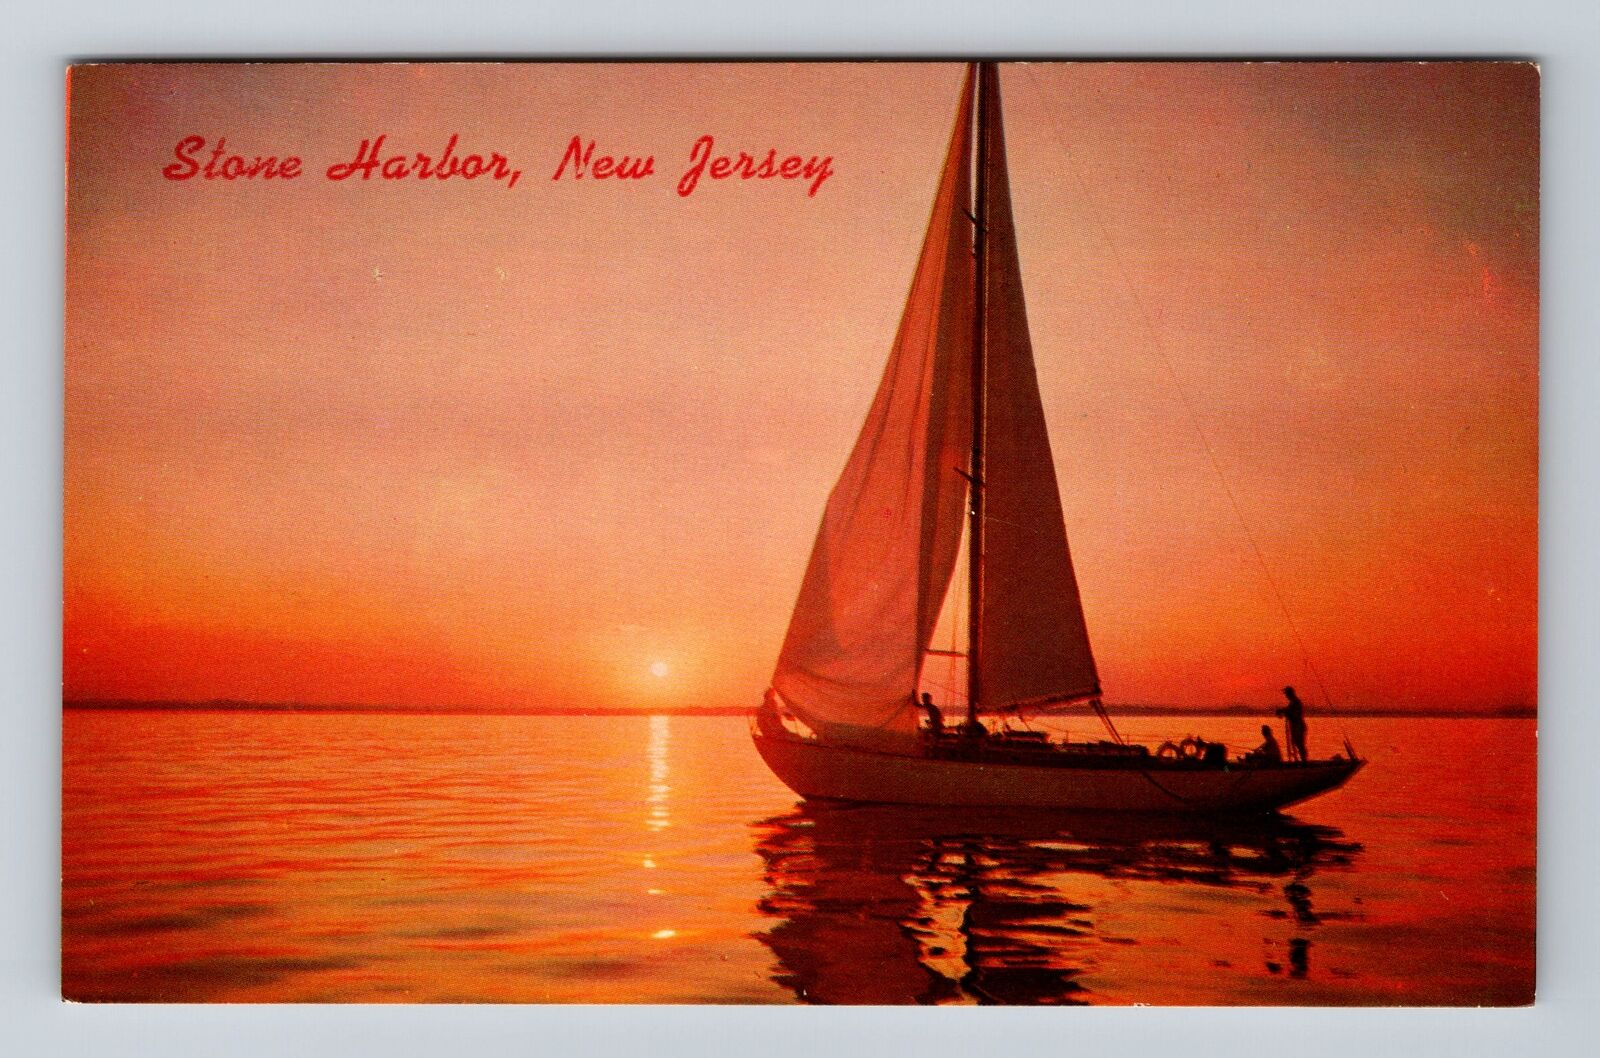 Stone Harbor NJ-New Jersey, Sunset on Stone Harbor Sailboat Vintage Postcard